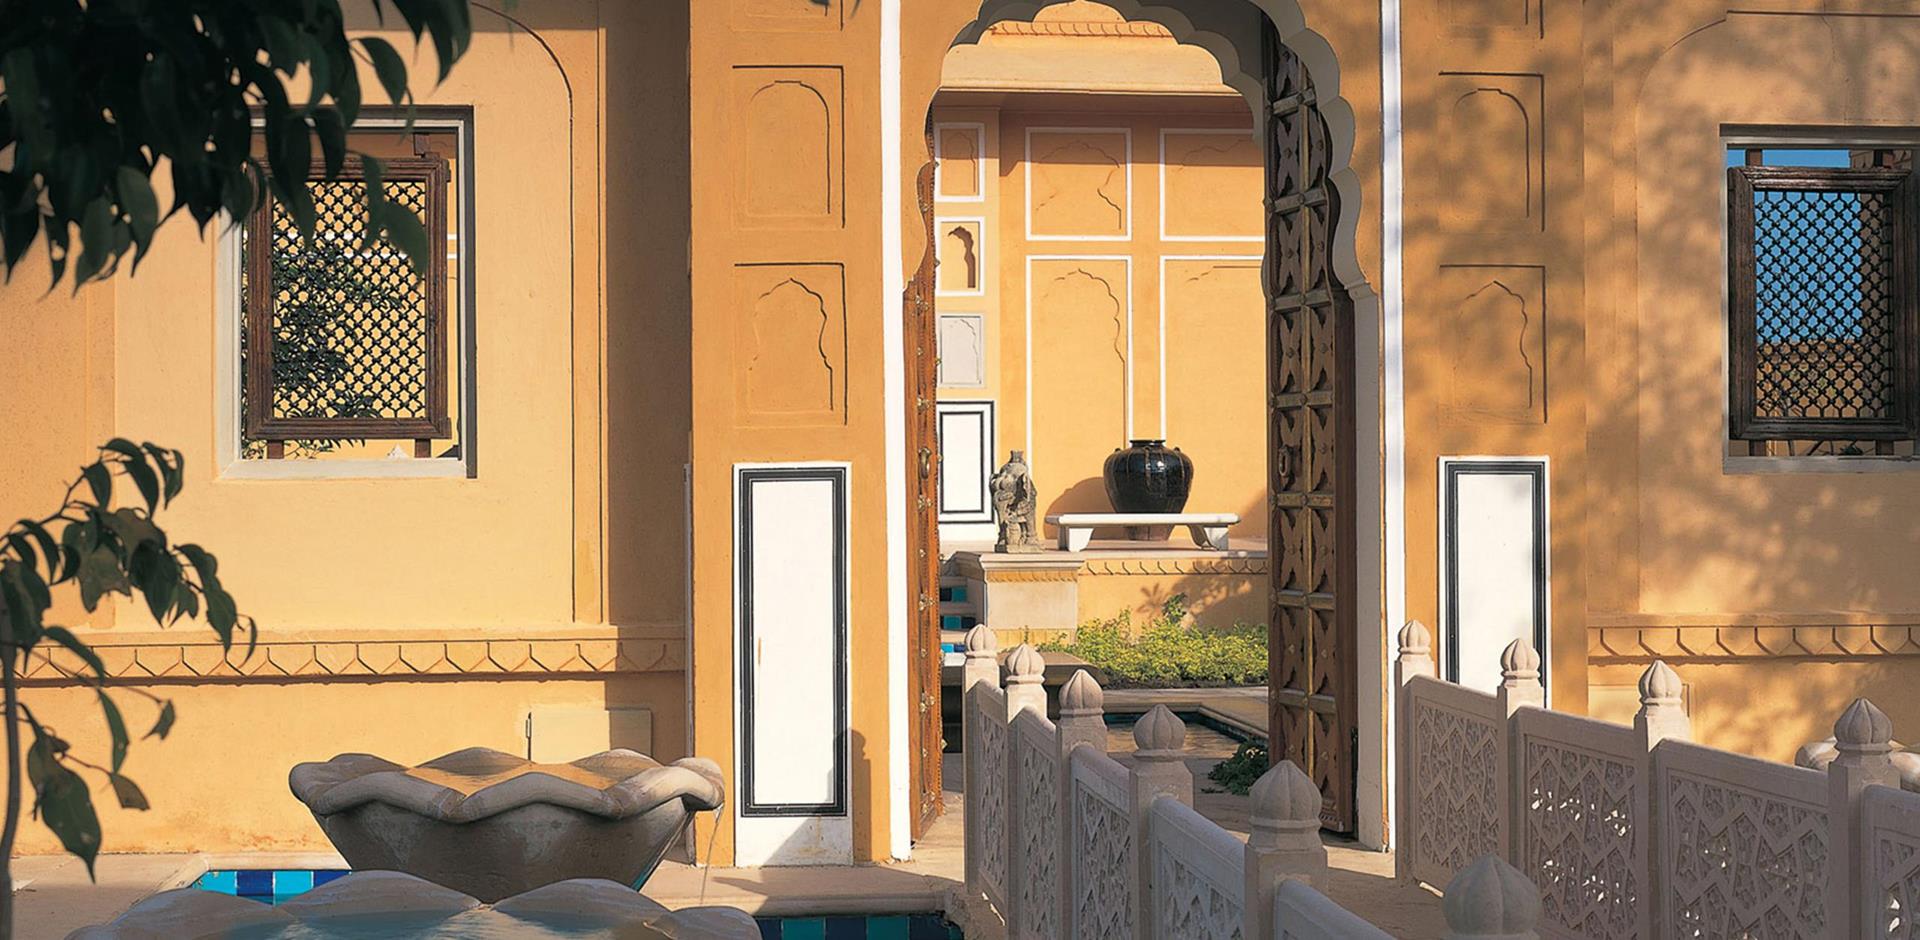 Exterior, The Oberoi Rajvilas, Jaipur, India